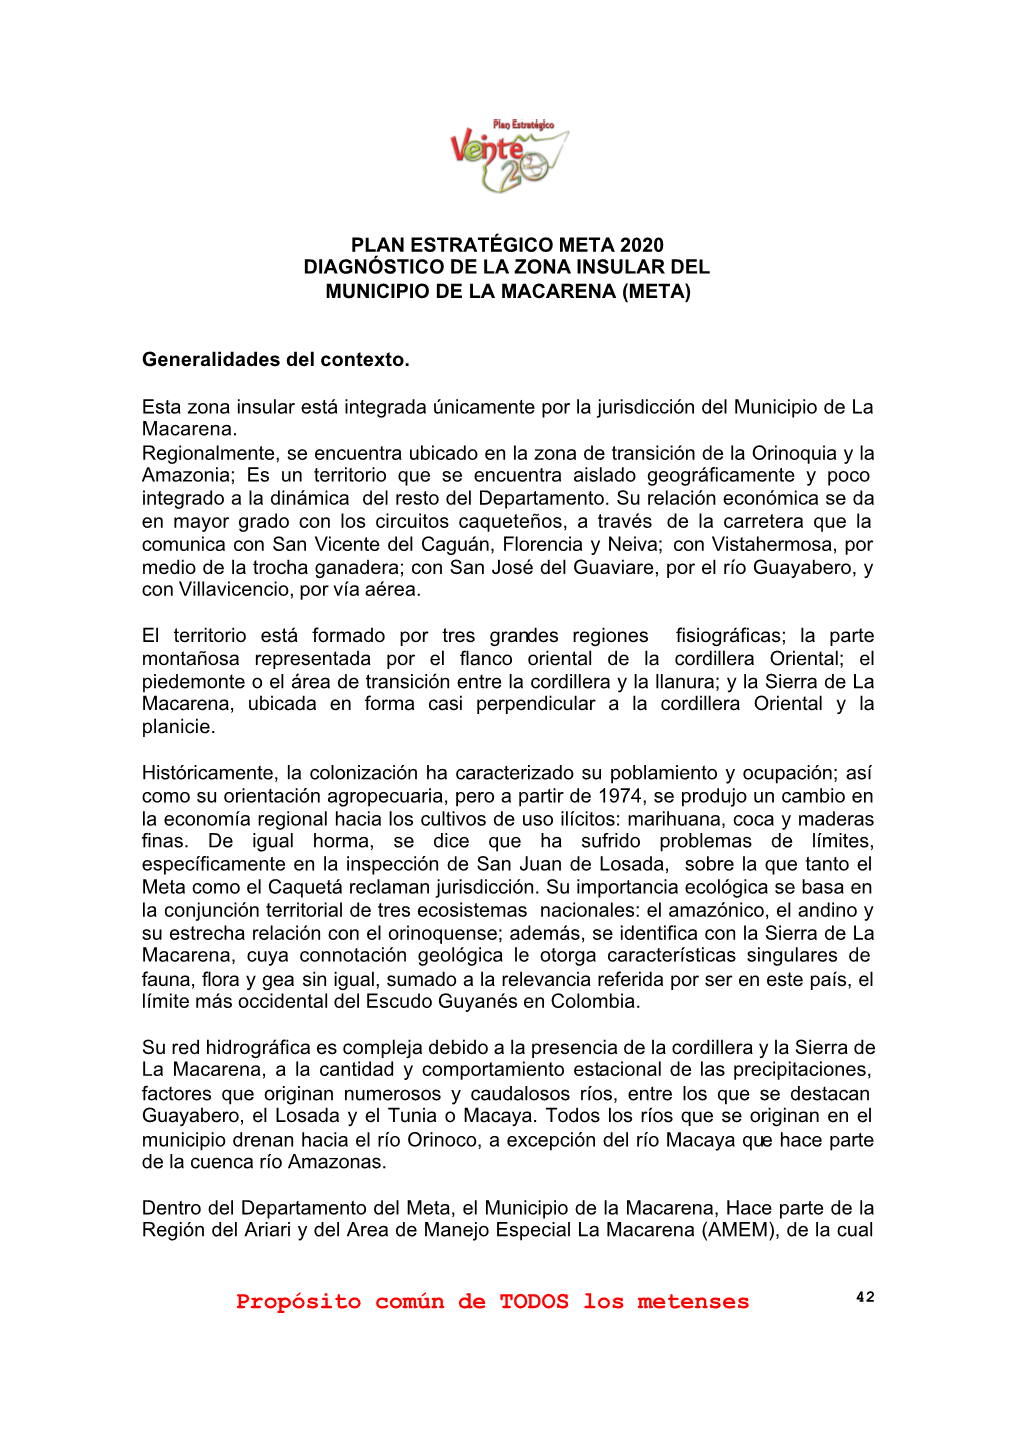 Plan Estratégico Meta 2020 Diagnóstico De La Zona Insular Del Municipio De La Macarena (Meta)